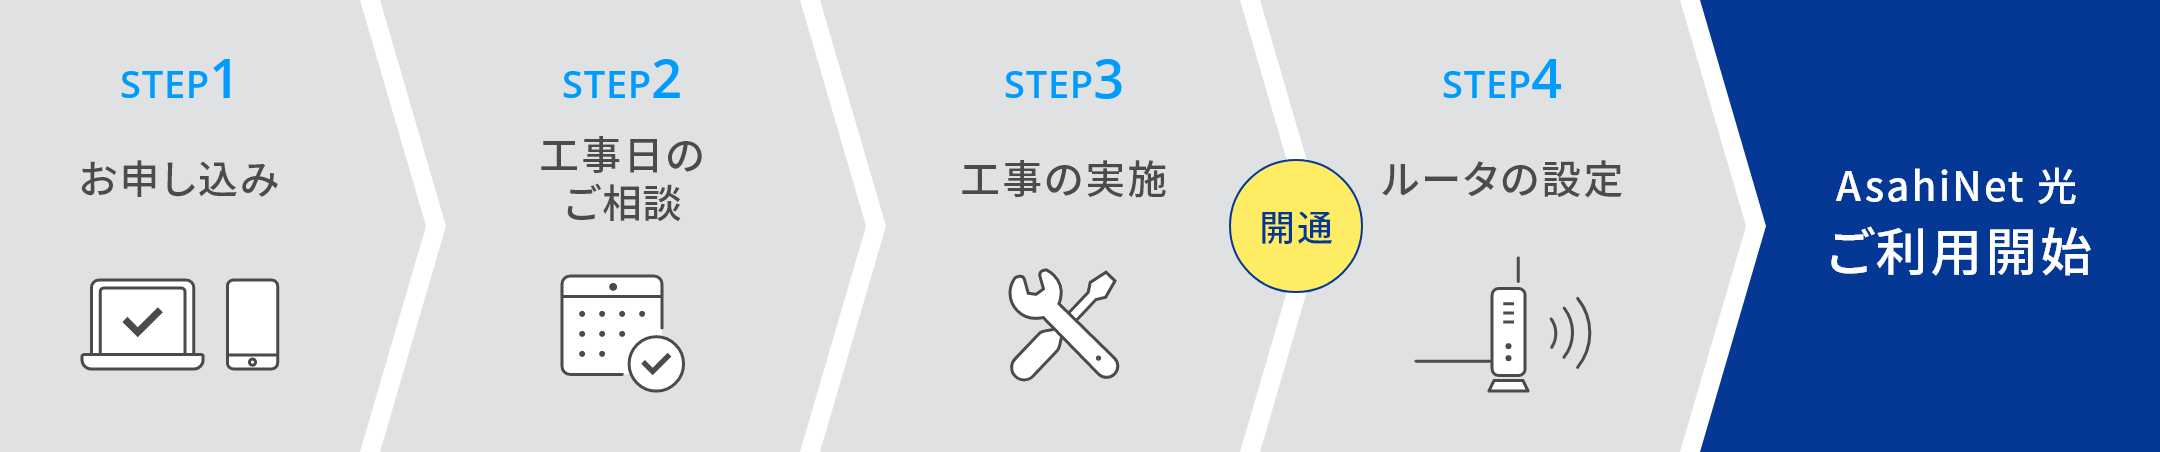 STEP1 お申し込み STEP2 工事日のご相談 STEP3 工事の実施 開通 STEP4 ルータの設定 AsahiNet 光ご利用開始